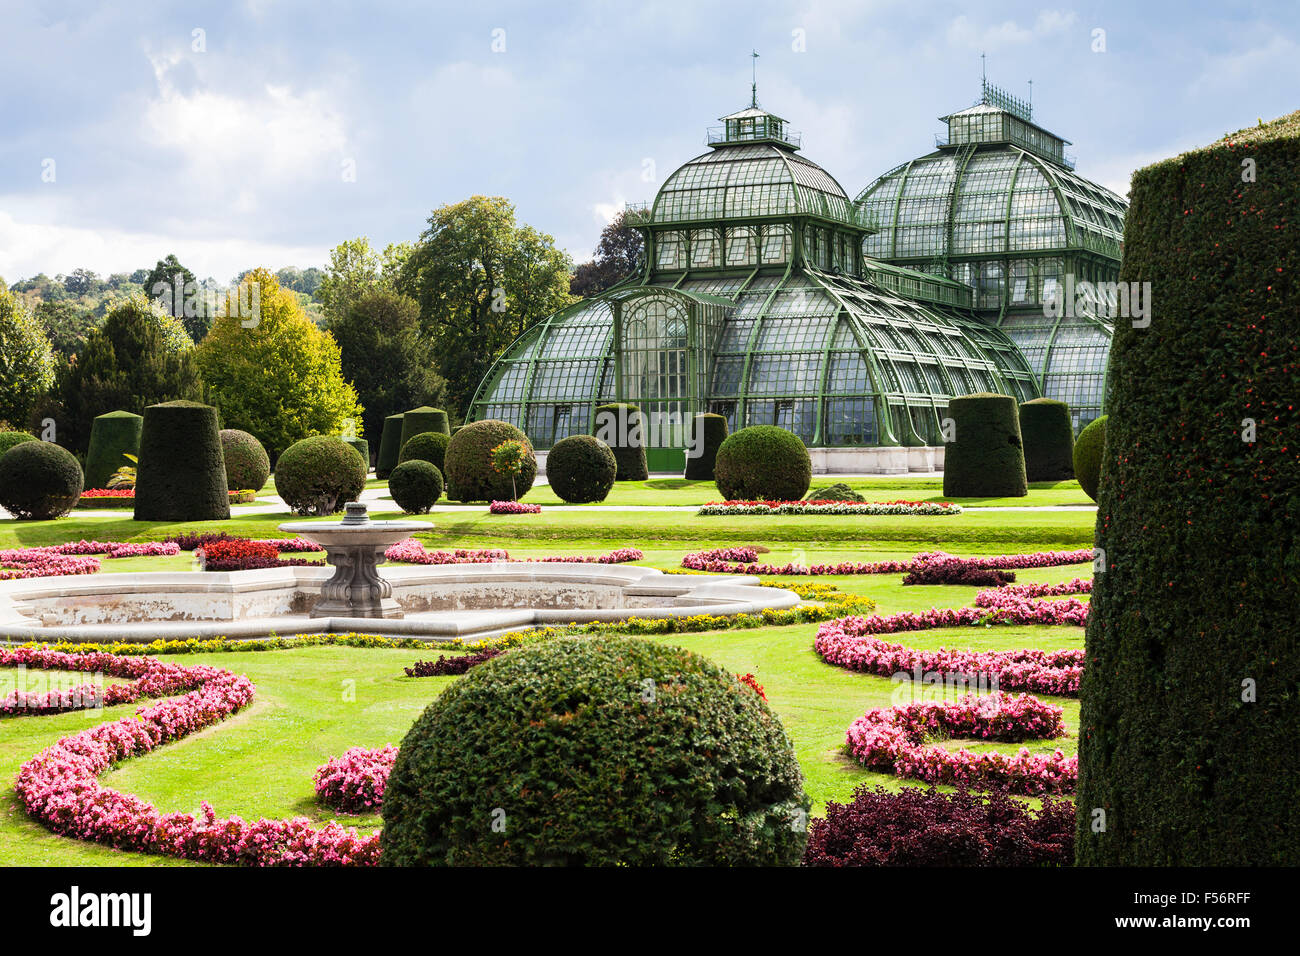 travel to Vienna city - Palmenhaus pavilion, large greenhouse in garden of Schloss Schonbrunn palace, Vienna, Austria Stock Photo